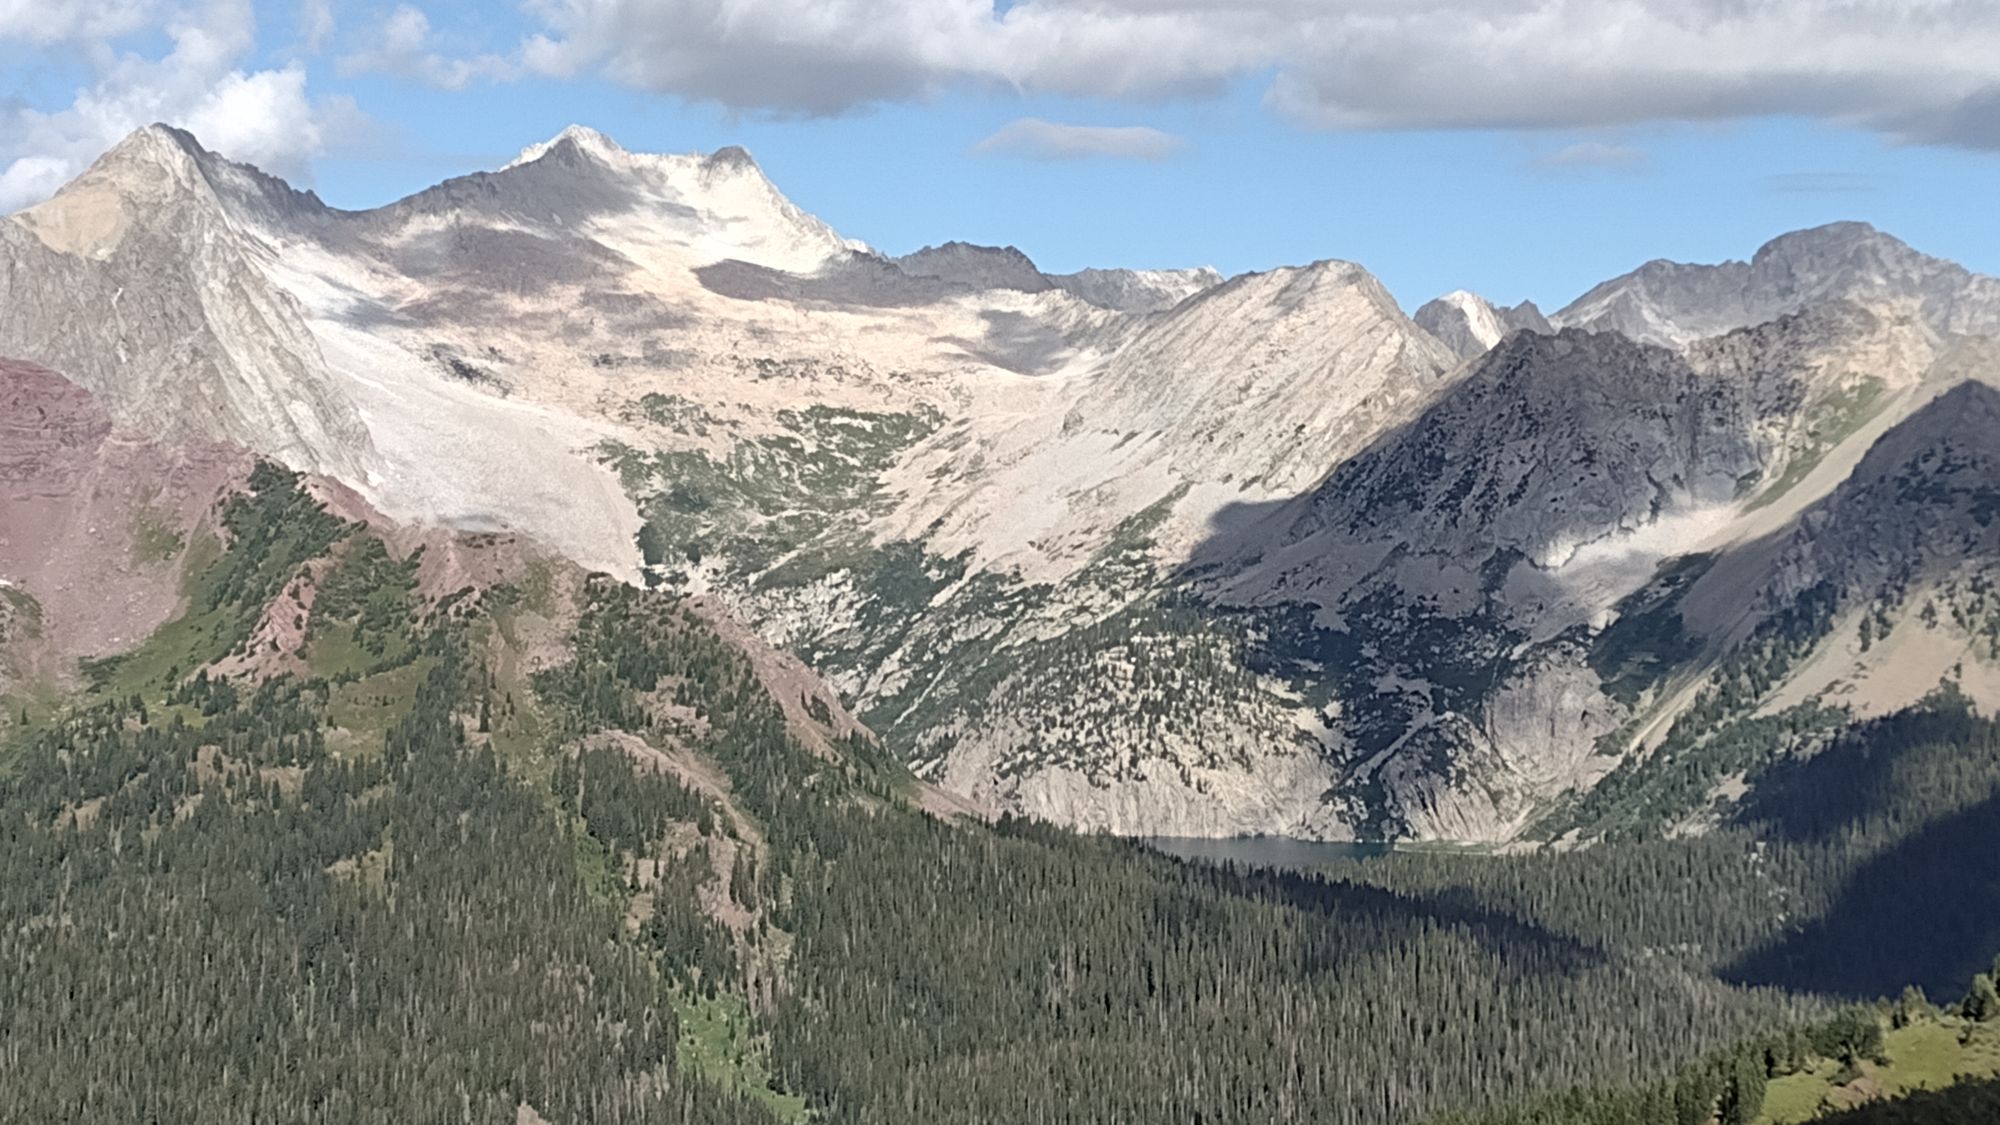 Colorado 4-Pass Loop Trip Report, August 5 - 8, 2022